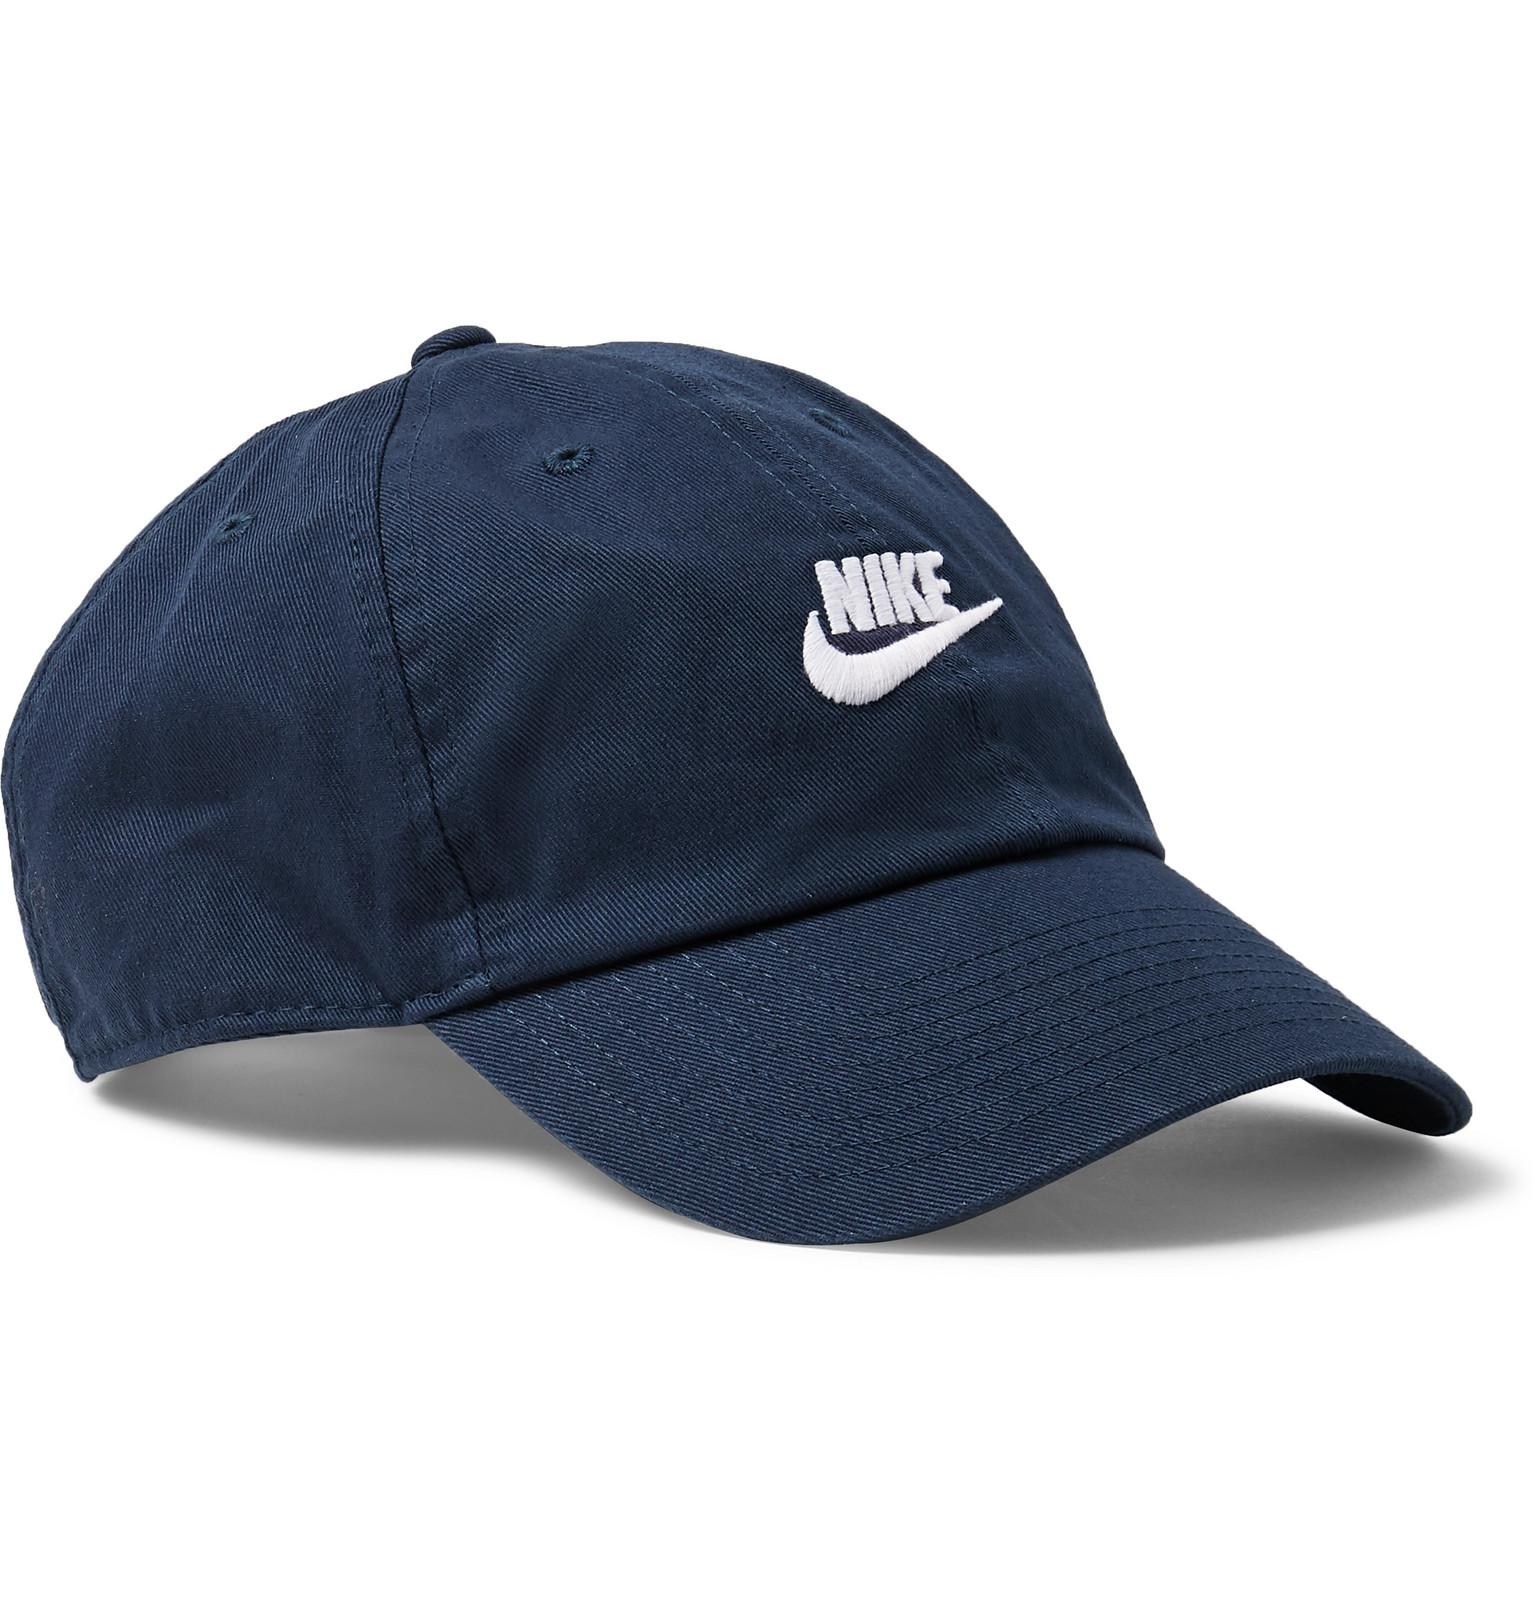 navy blue nike cap